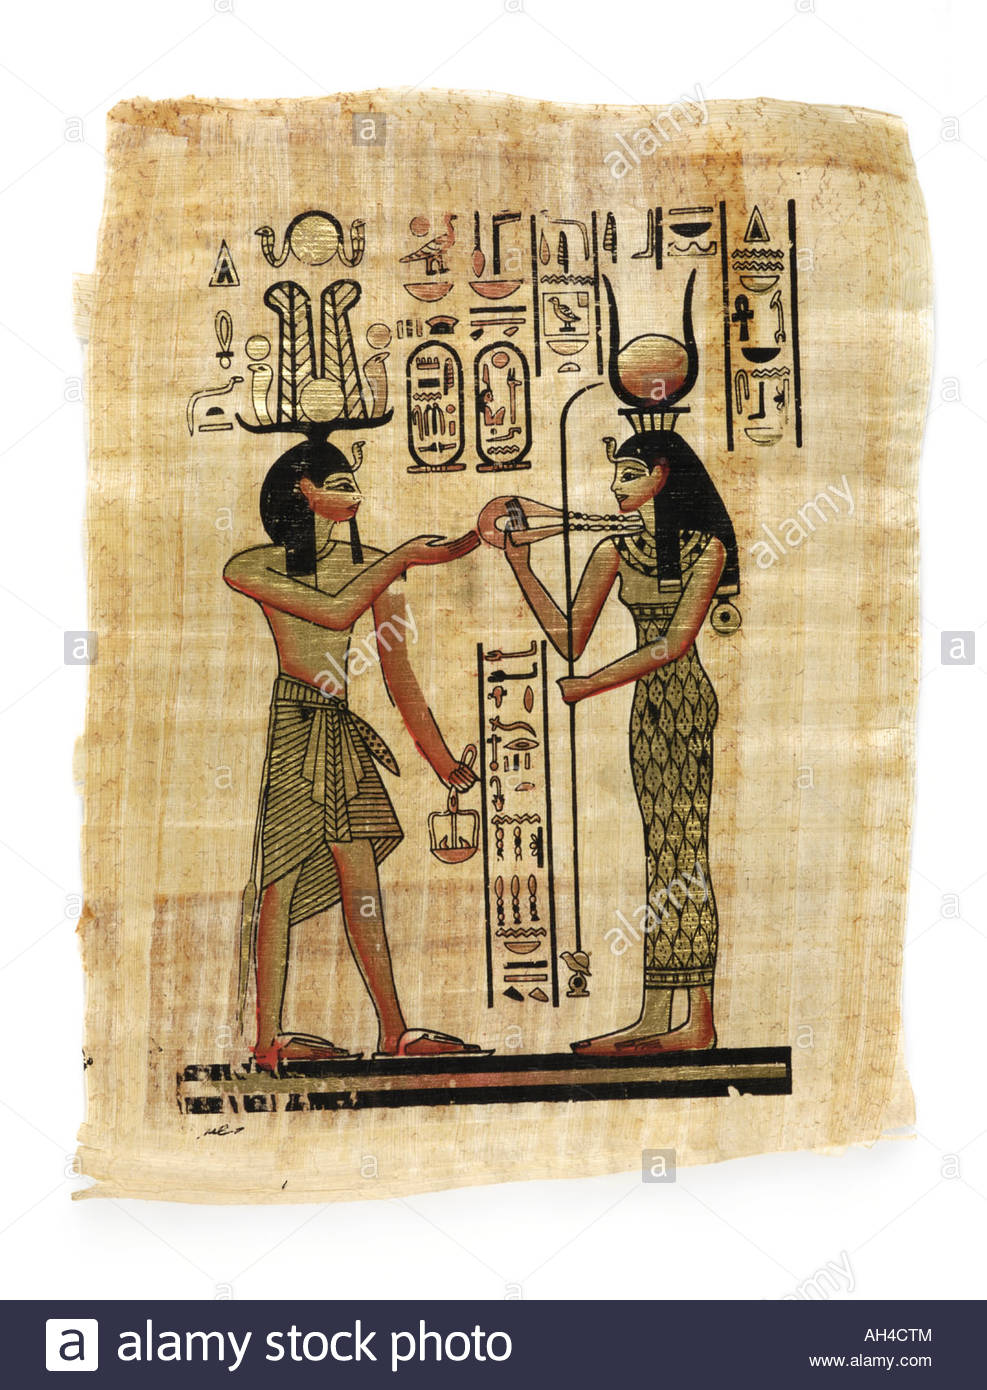 egyptian-souvenir-papyrus-with-antique-art-drawing-AH4CTM.jpg